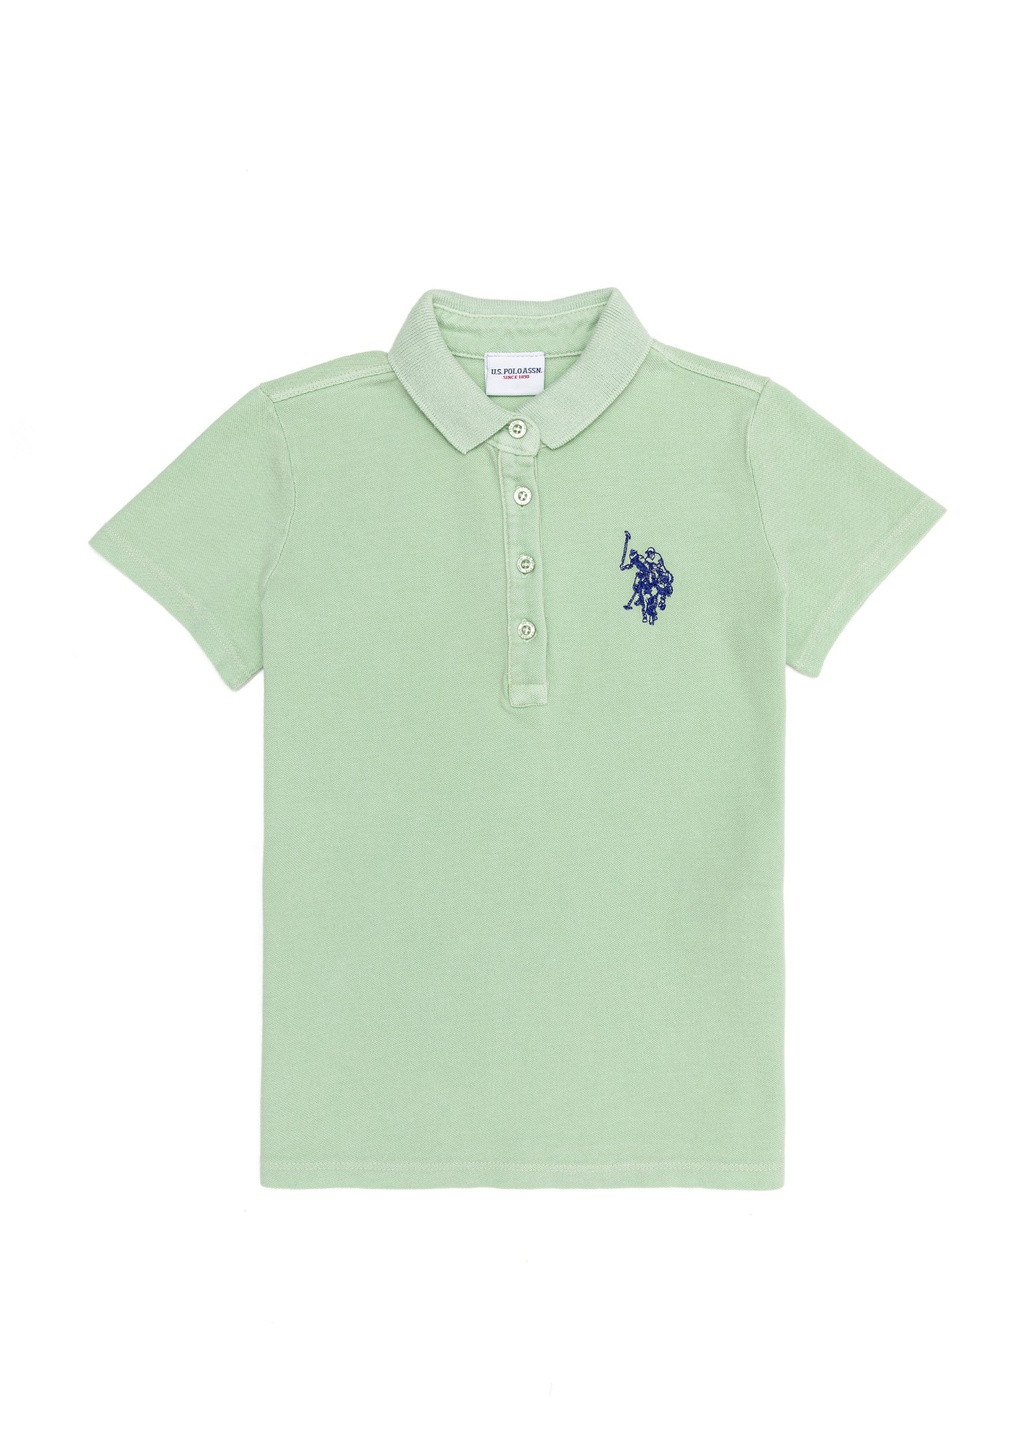 Мятная детская футболка-футболка u.s/ polo assn. на девочку для девочки U.S. Polo Assn.